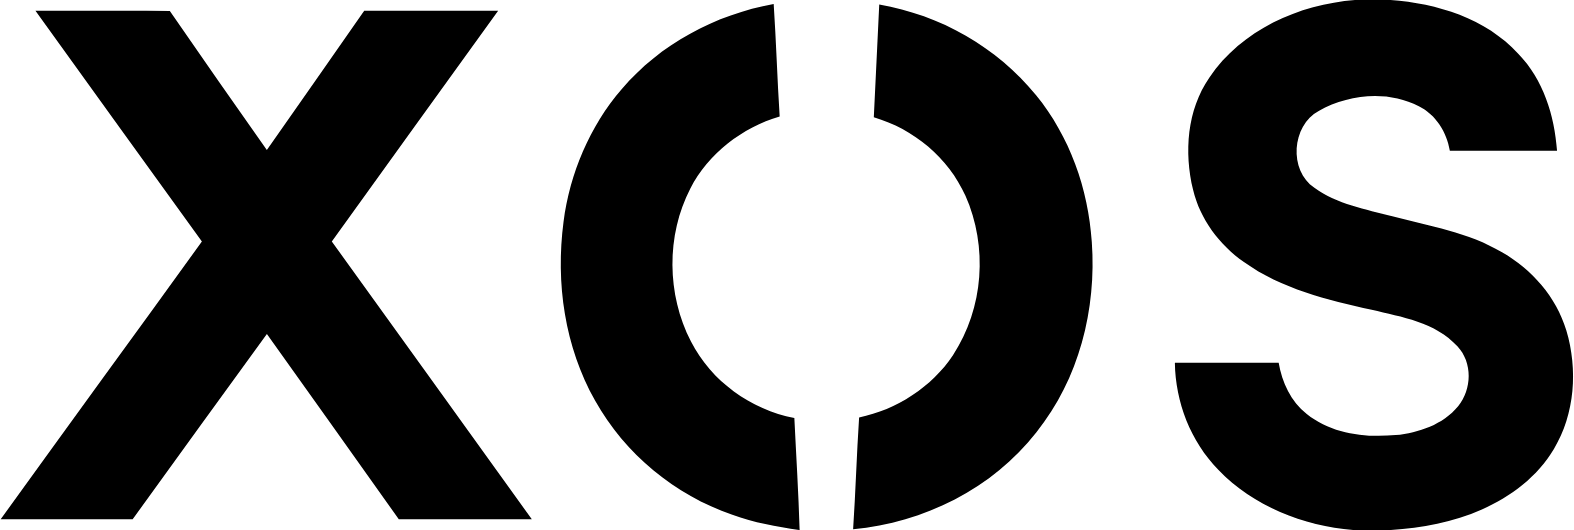 XOS logo large (transparent PNG)